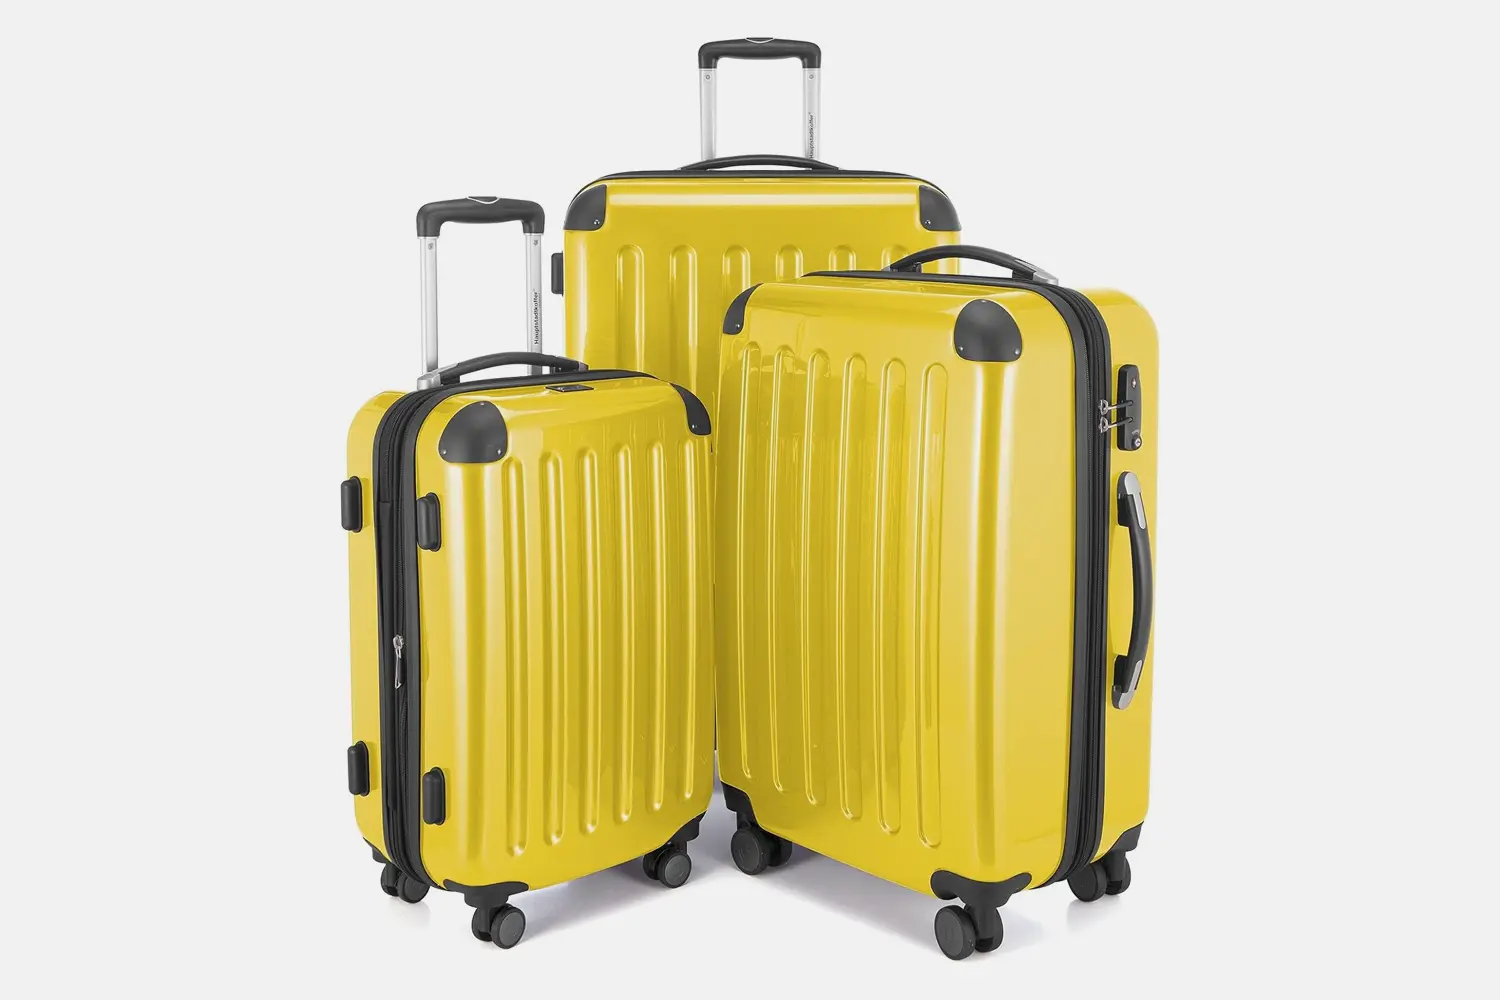 Hauptstadtkoffer Hardside Luggages Set – 3 Piece